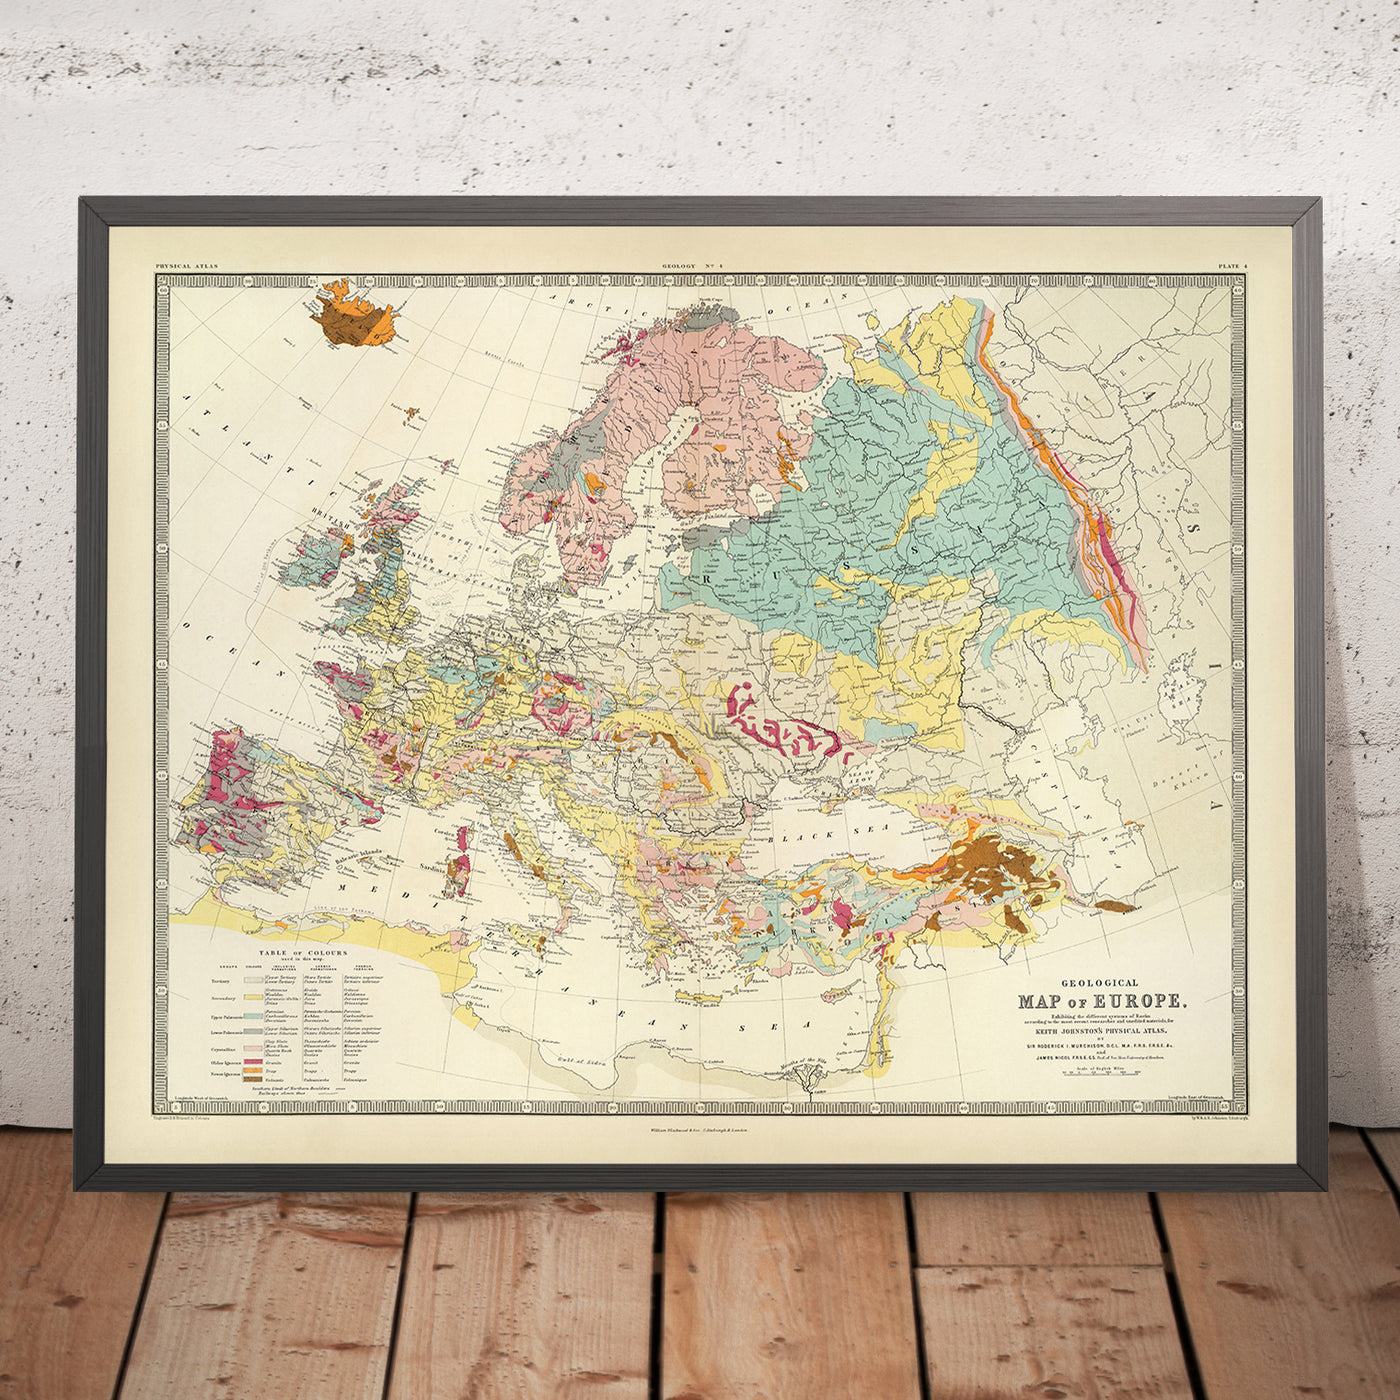 Antiguo mapa geológico de Europa por AK Johnston, 1856: Mapa geológico de montañas, rocas y estratos